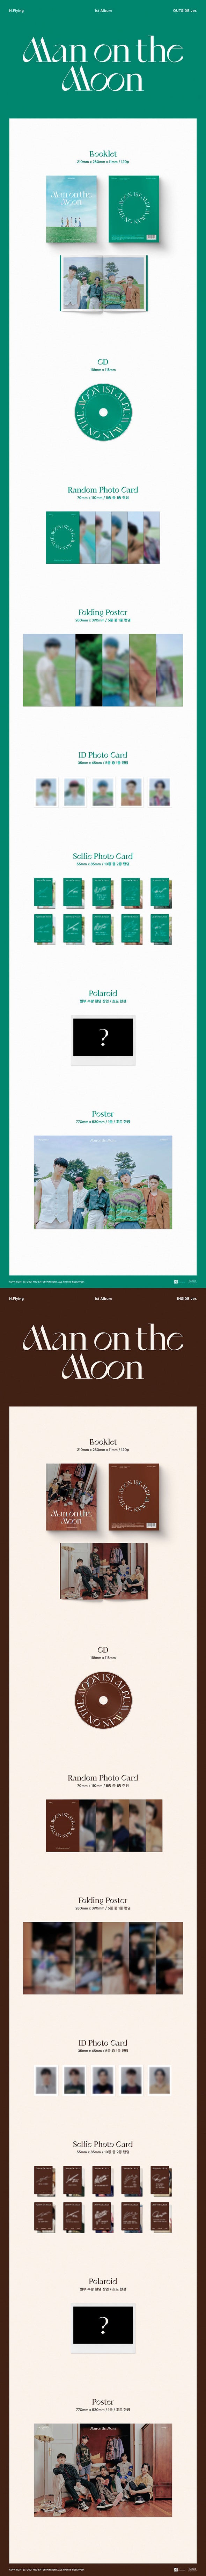 N.FLYING - Man On The Moon 1st Album